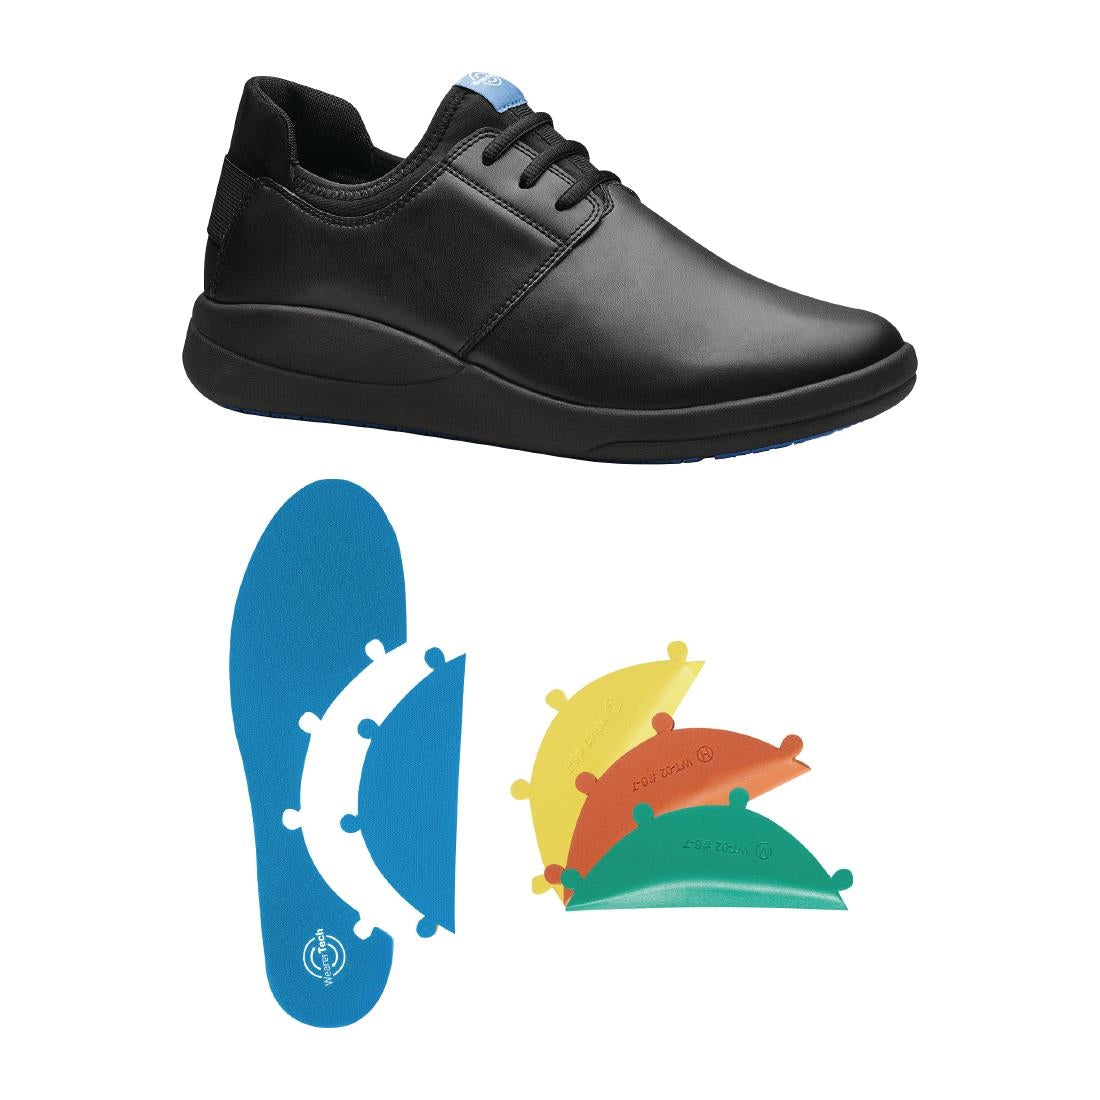 WearerTech Relieve Shoe Black/Black with Modular Insole Size 44